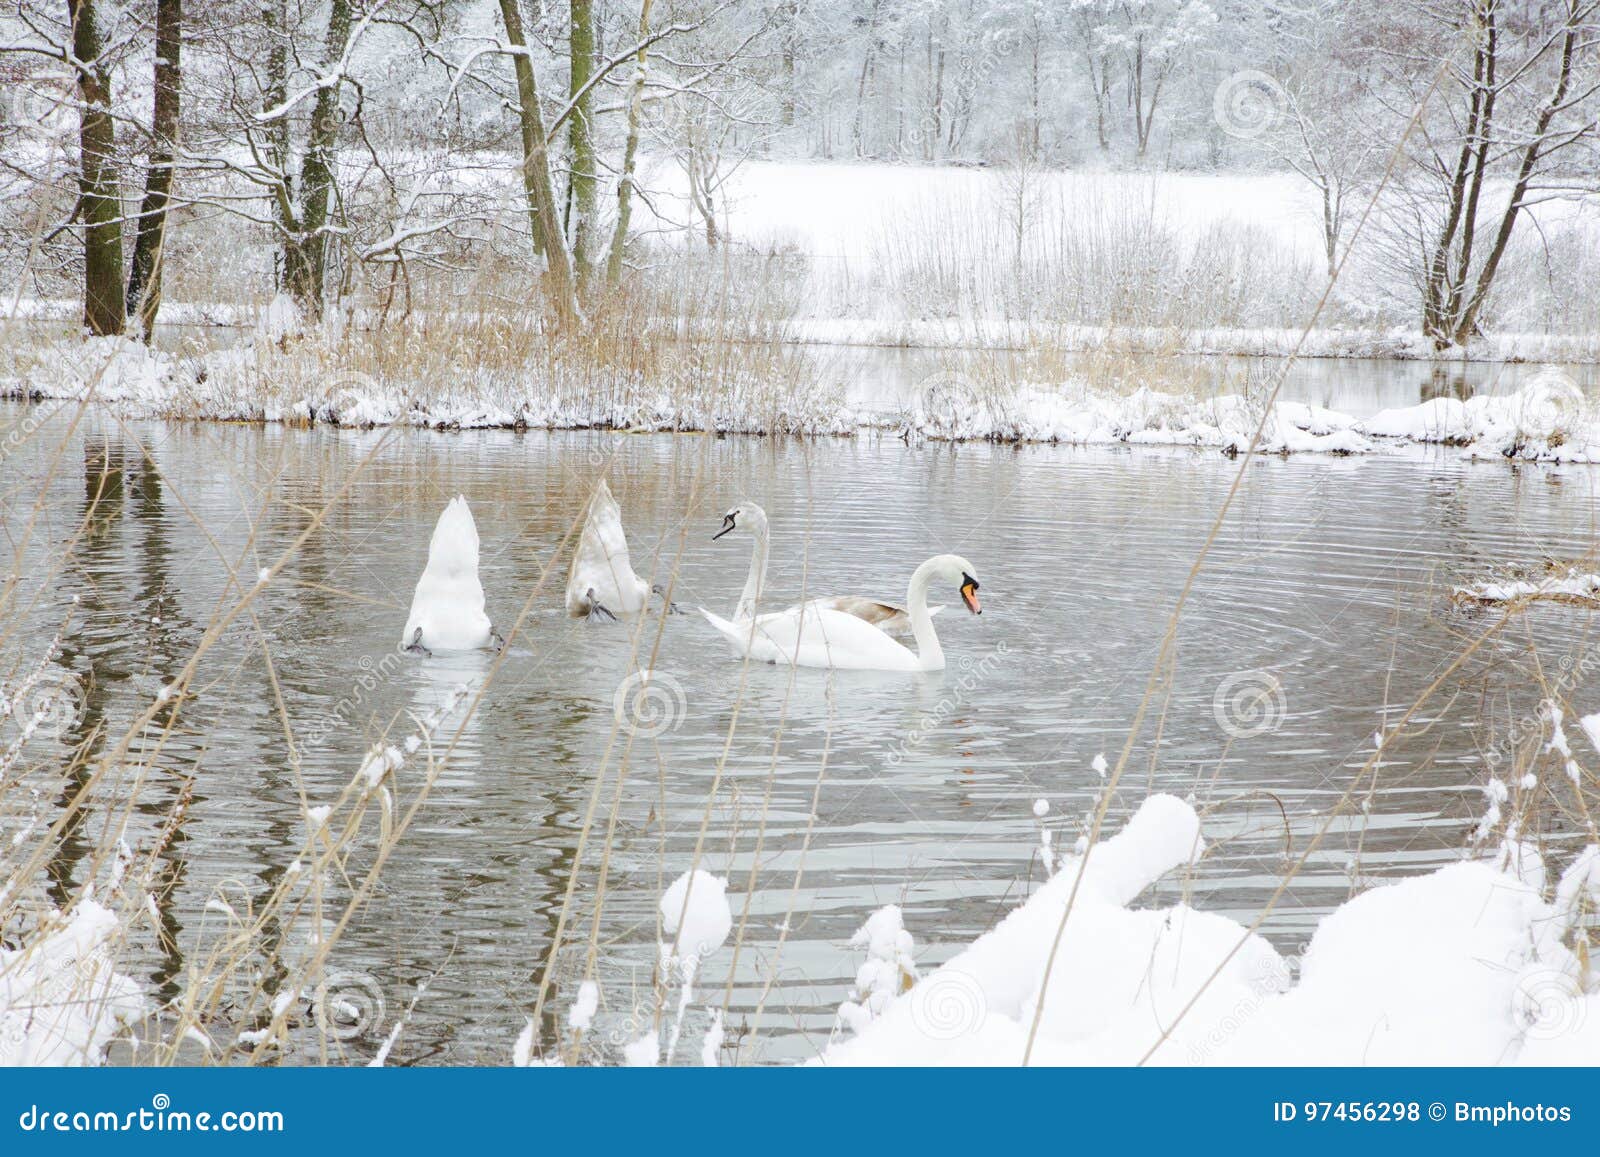 swans in wintertime